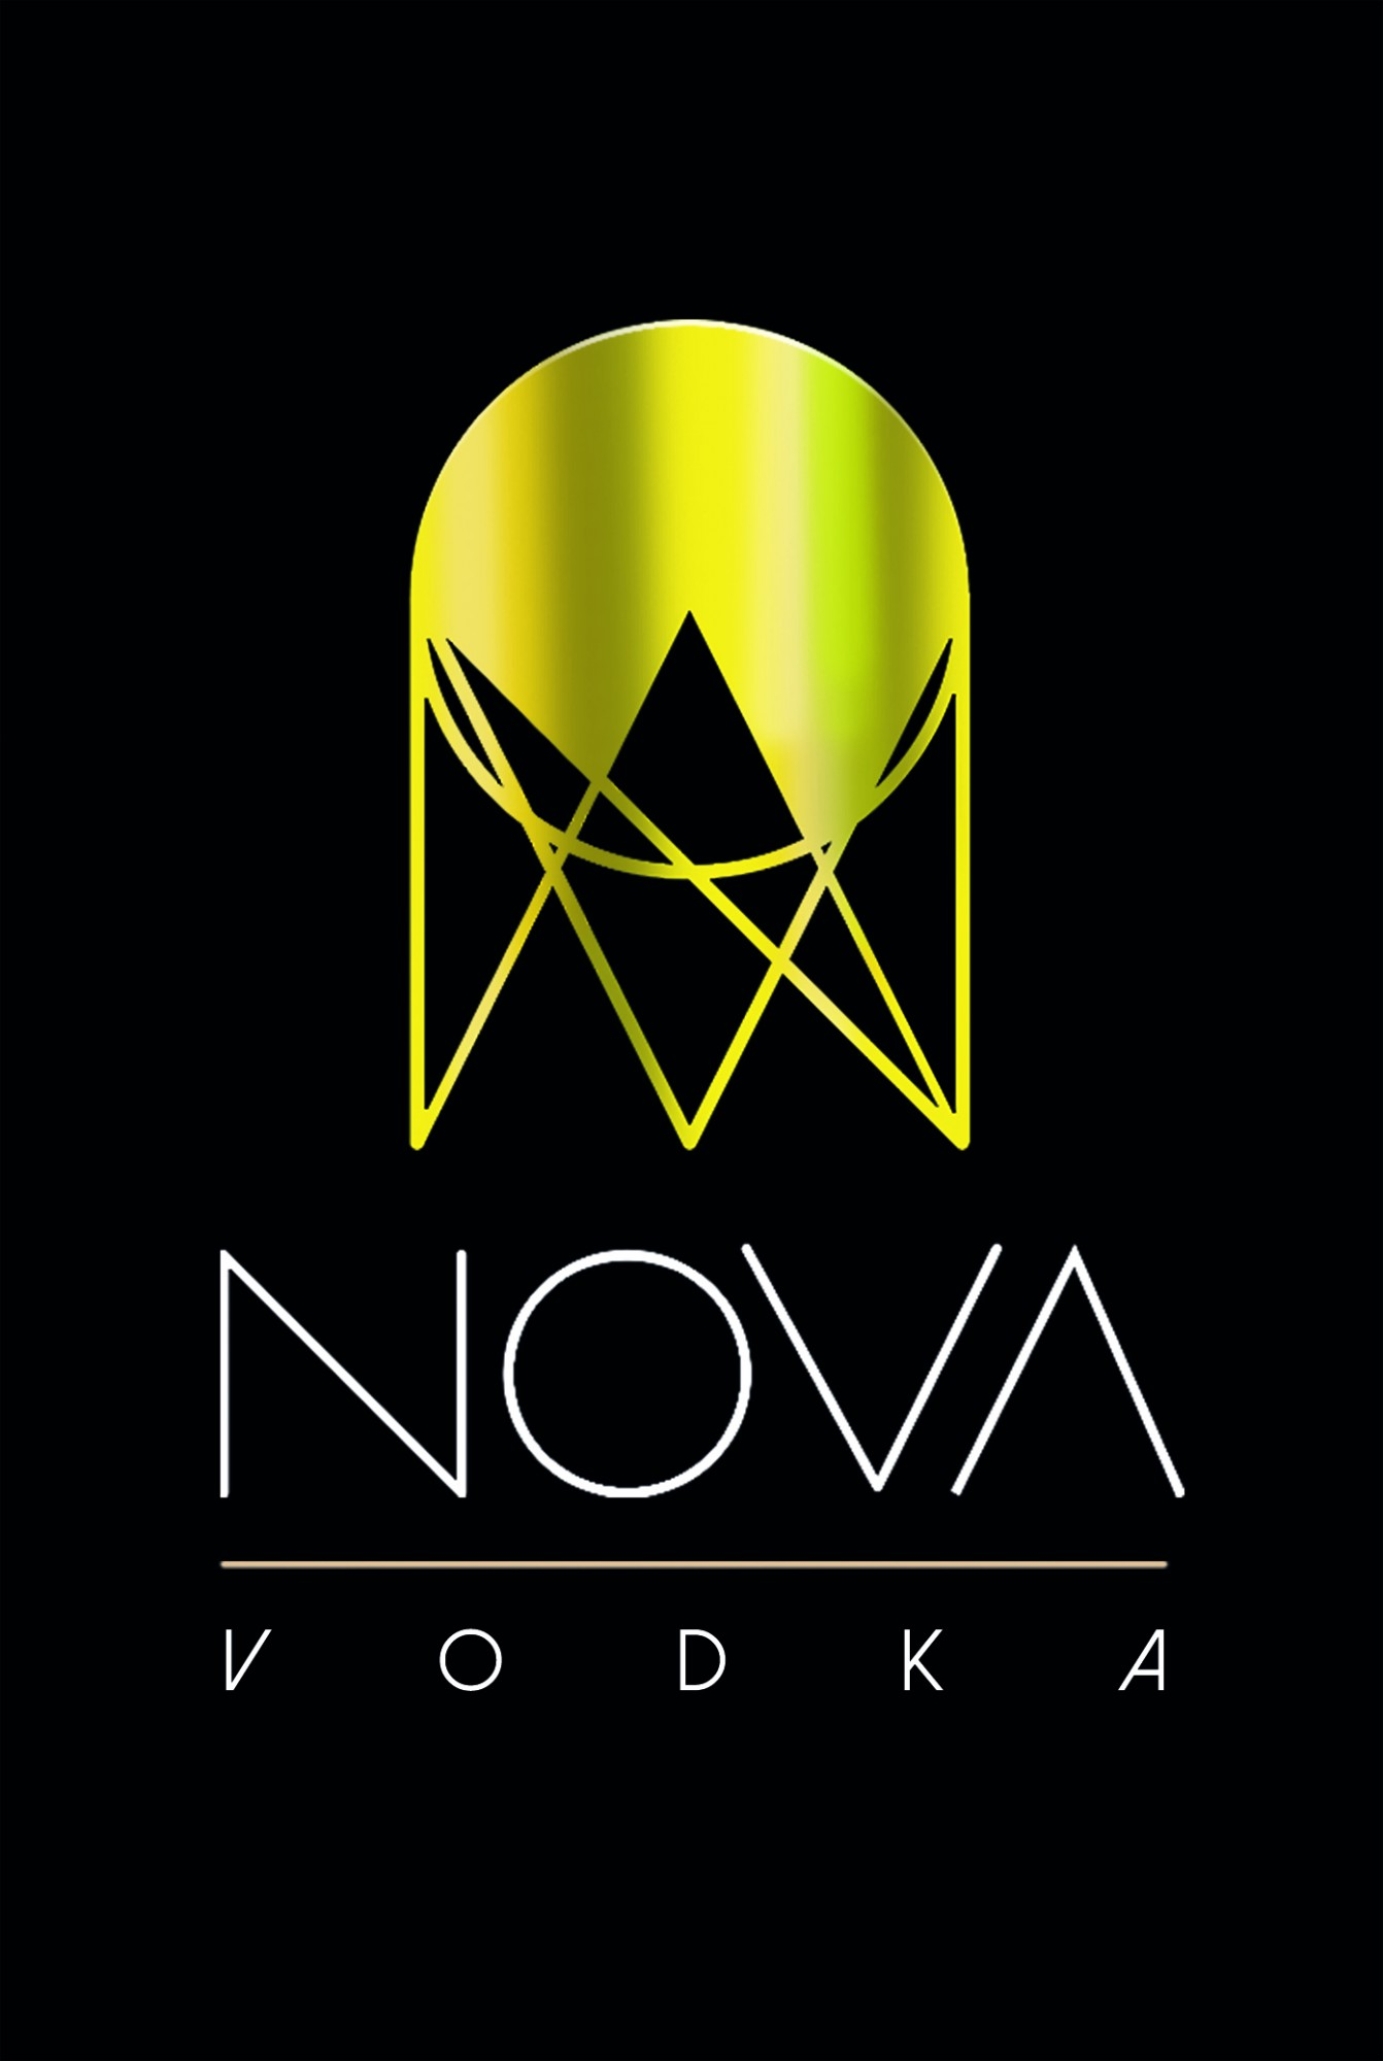 Nova Vodka - Logo design, branding and label design